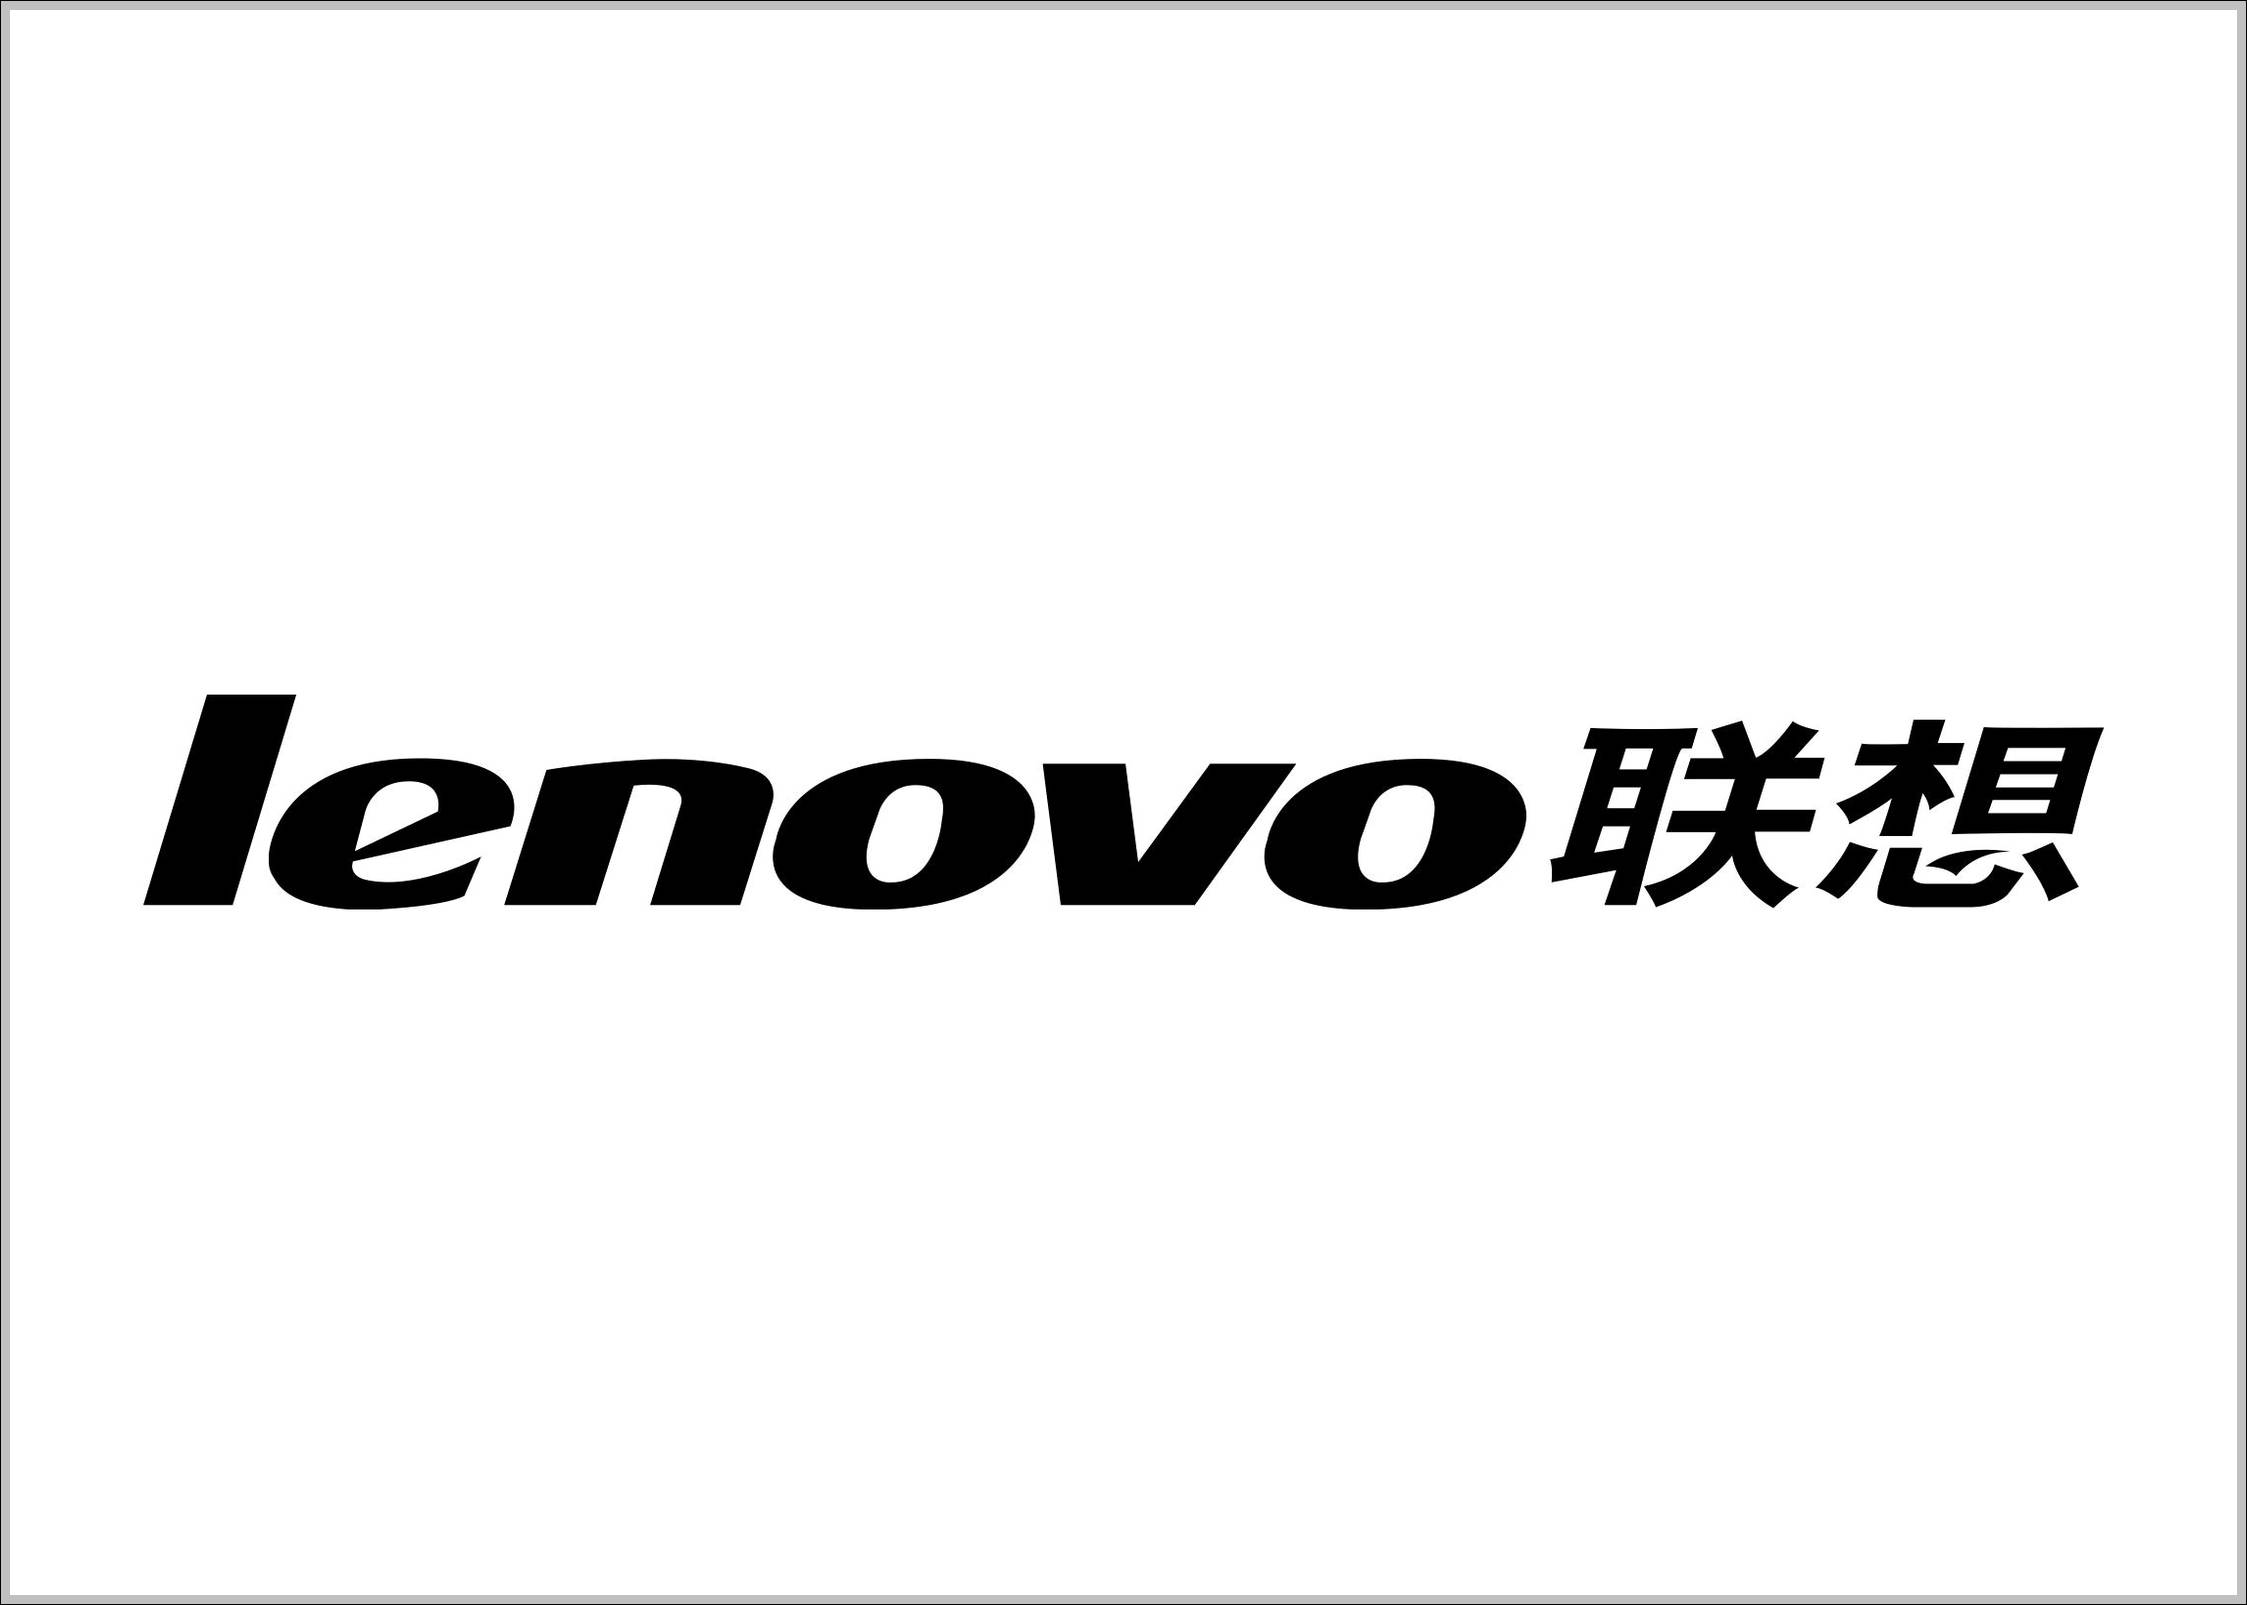 Lenovo logo and Chinese name